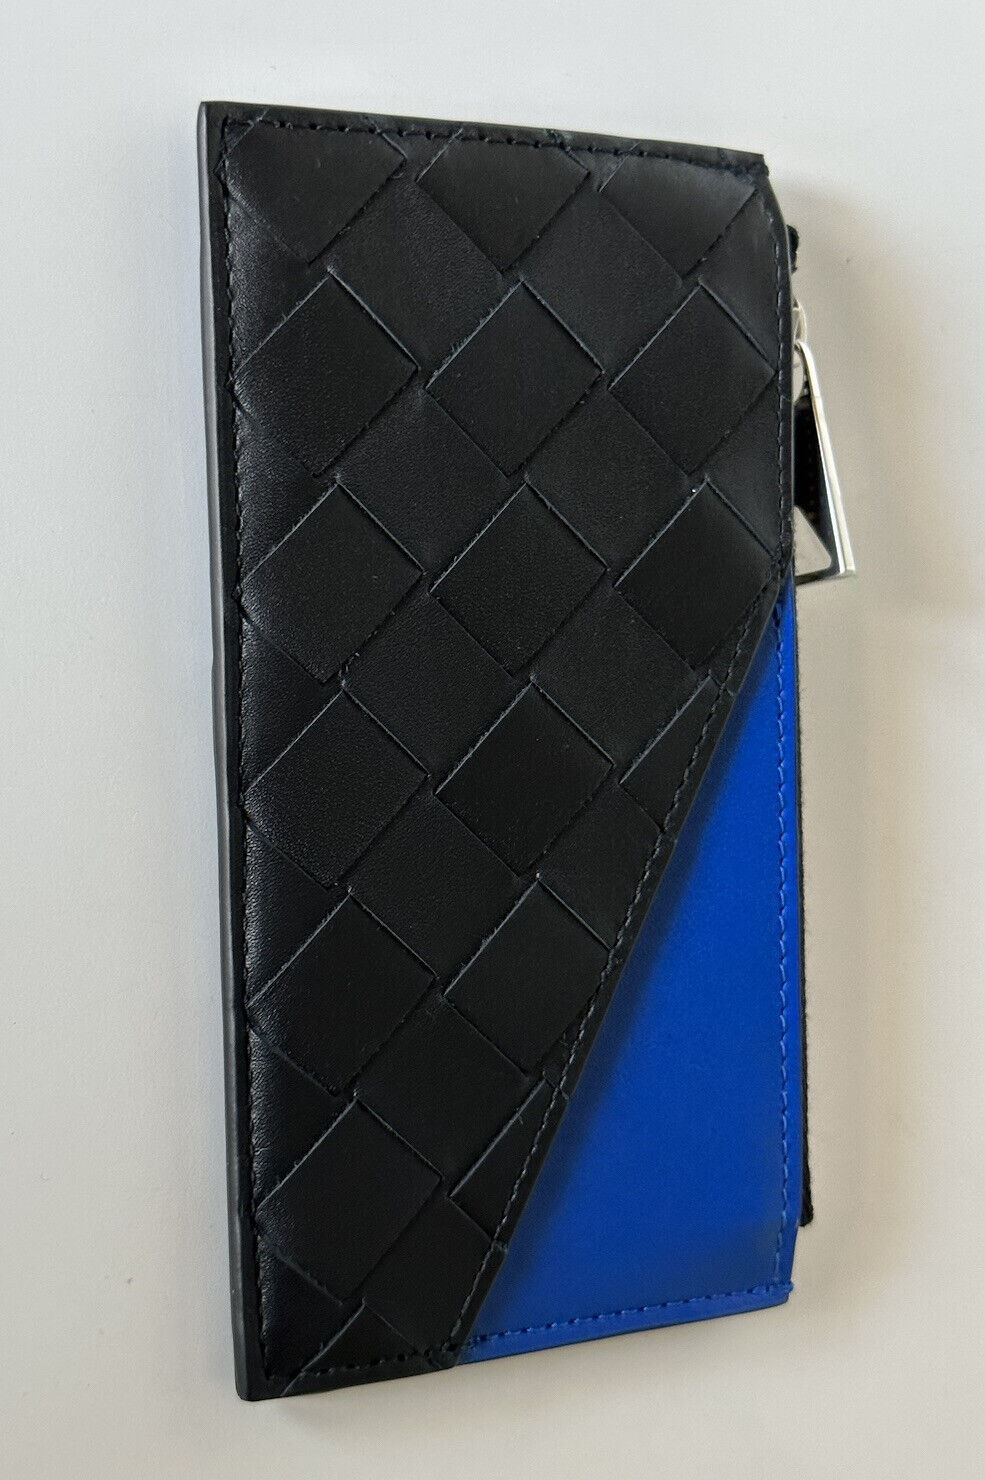 New Bottega Veneta Leather Slim Wallet Intreccio Weave Black/Blue Made in Italy